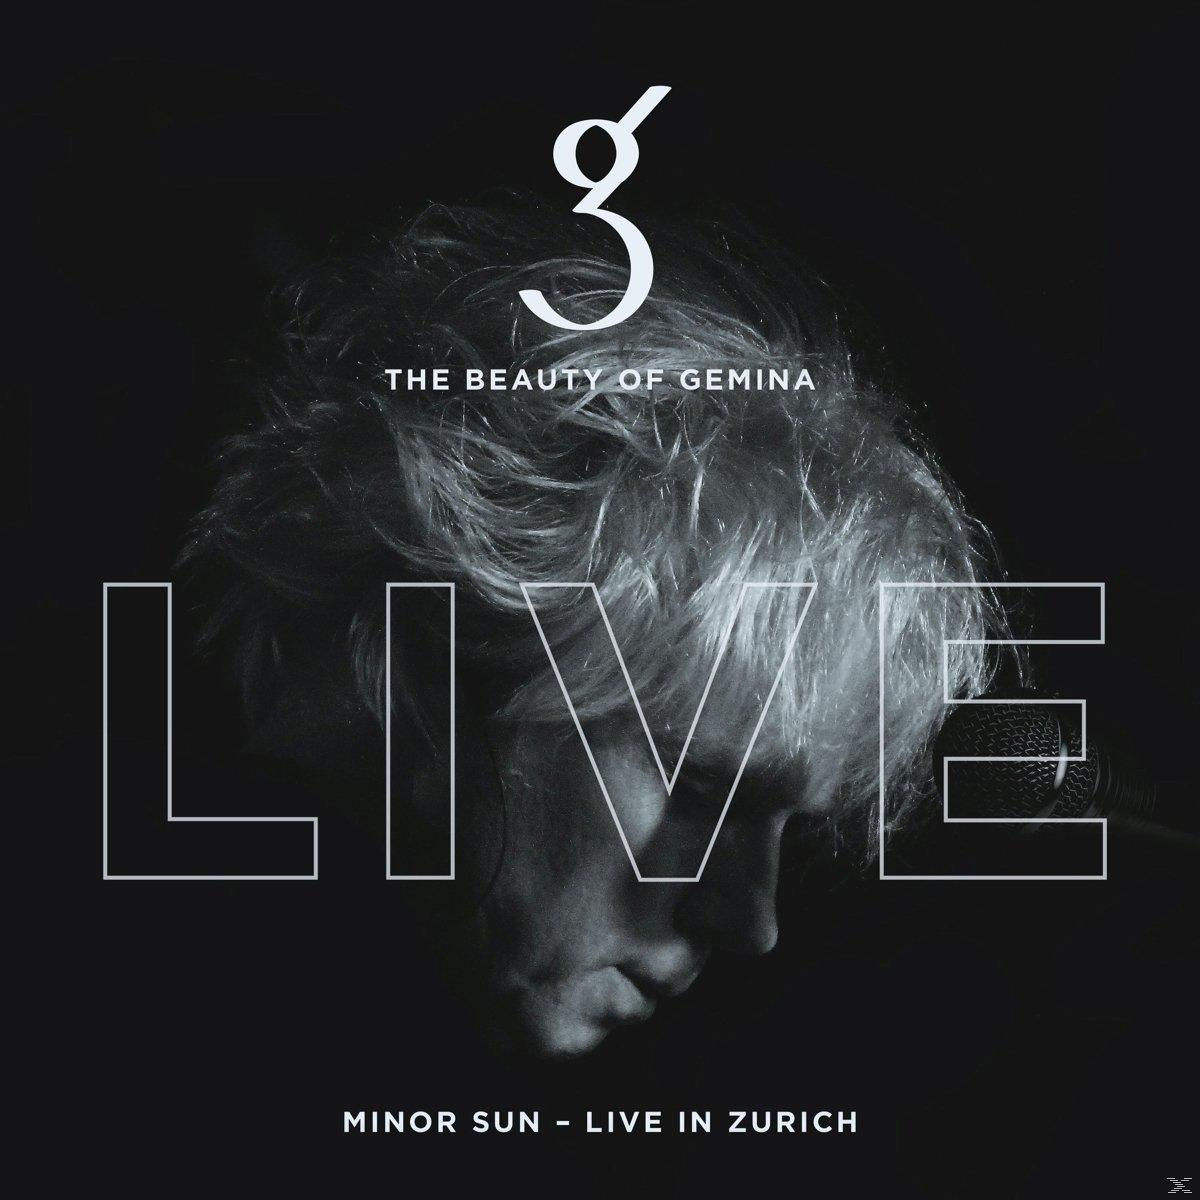 Minor Of Sun-Live Gemina The In Beauty - - (CD) Zurich